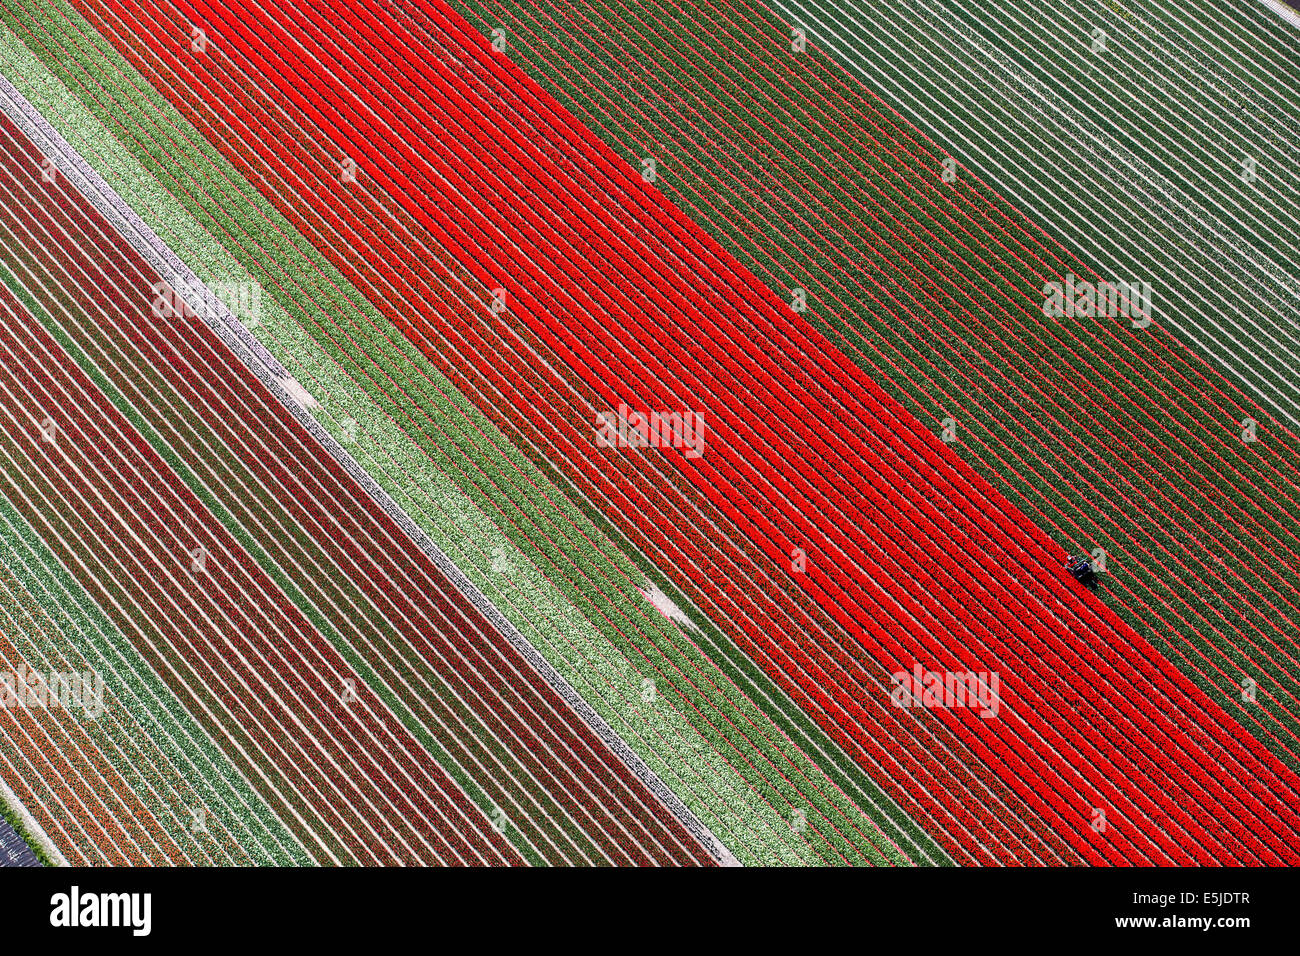 Paesi Bassi, Burgervlotbrug, campi di tulipani, agricoltore topping tulipani. Antenna Foto Stock